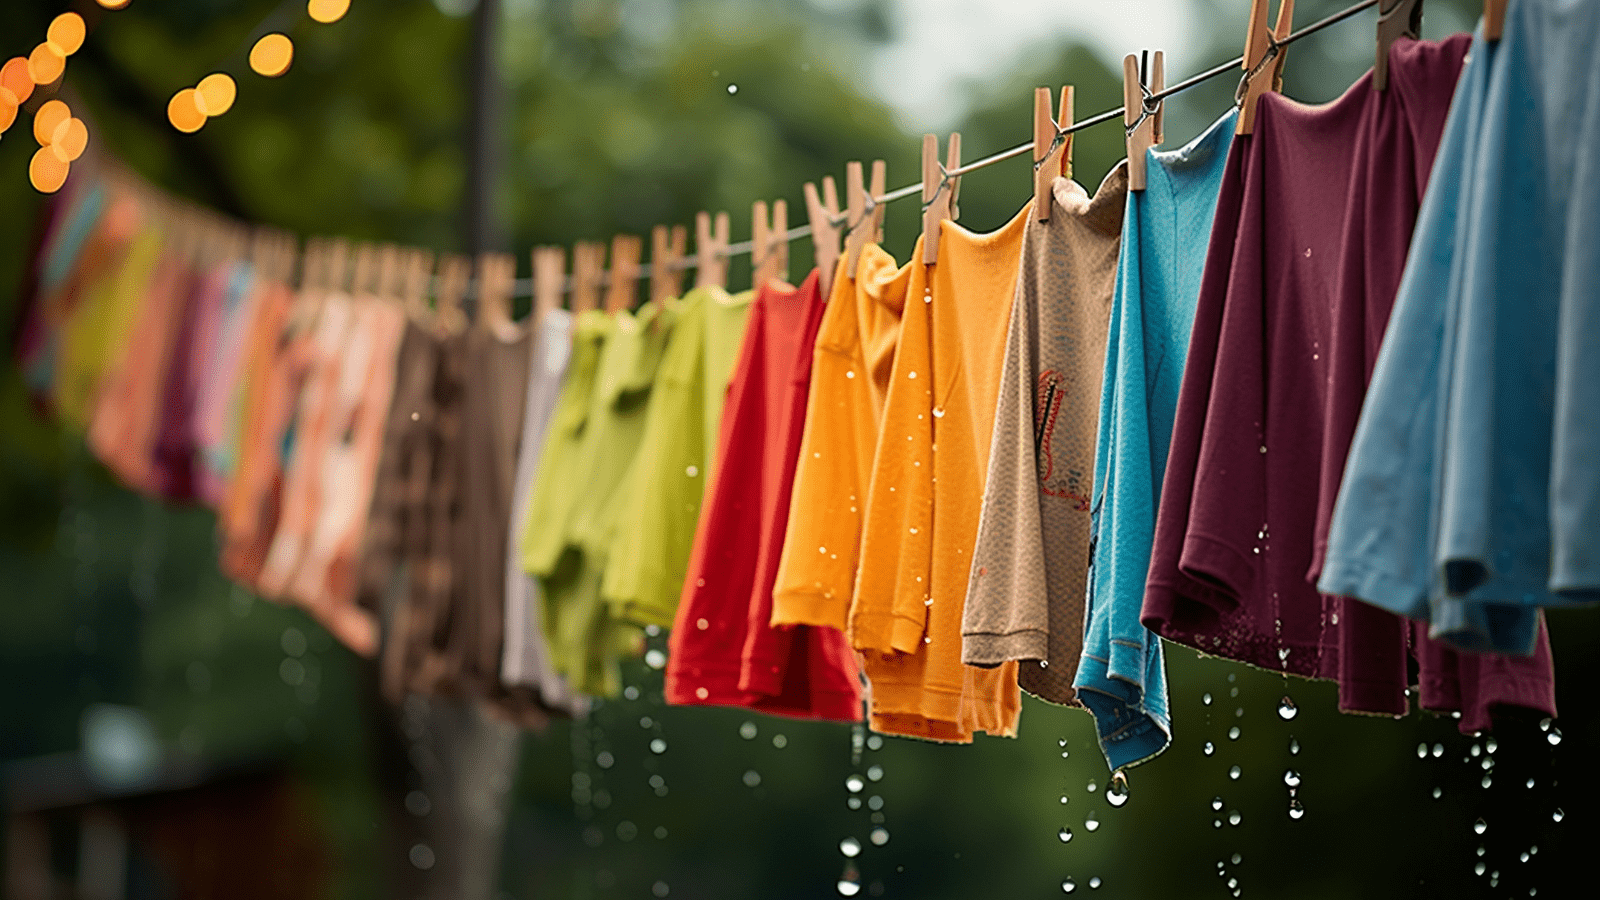 Wet Laundry on the outside washing line